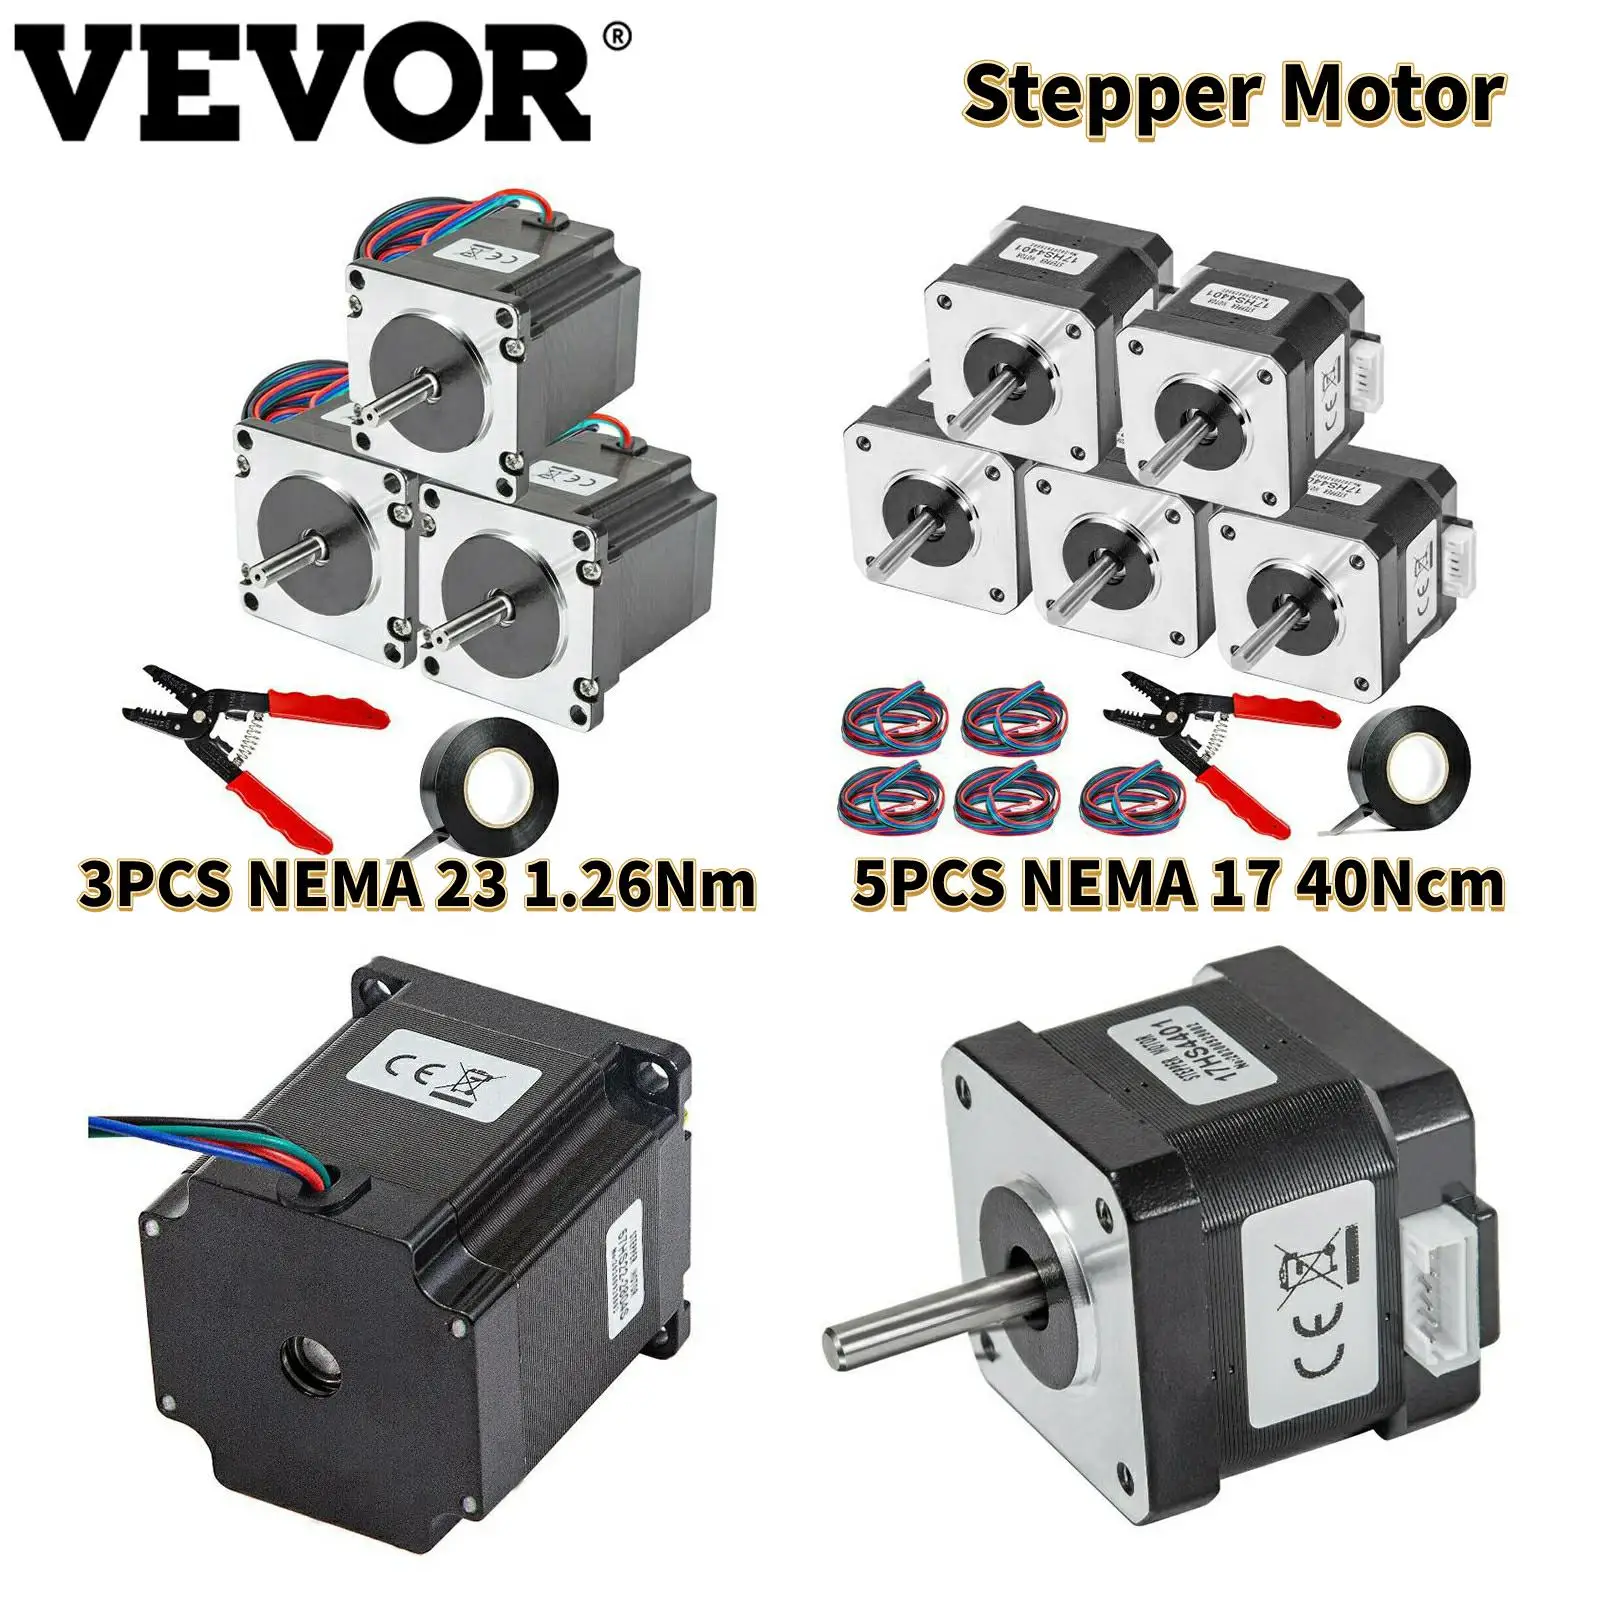 VEVOR Nema 23 Stepper Motor 178.5 oz.in High Torque 2.8A 57x56 mm for 3D Printer 